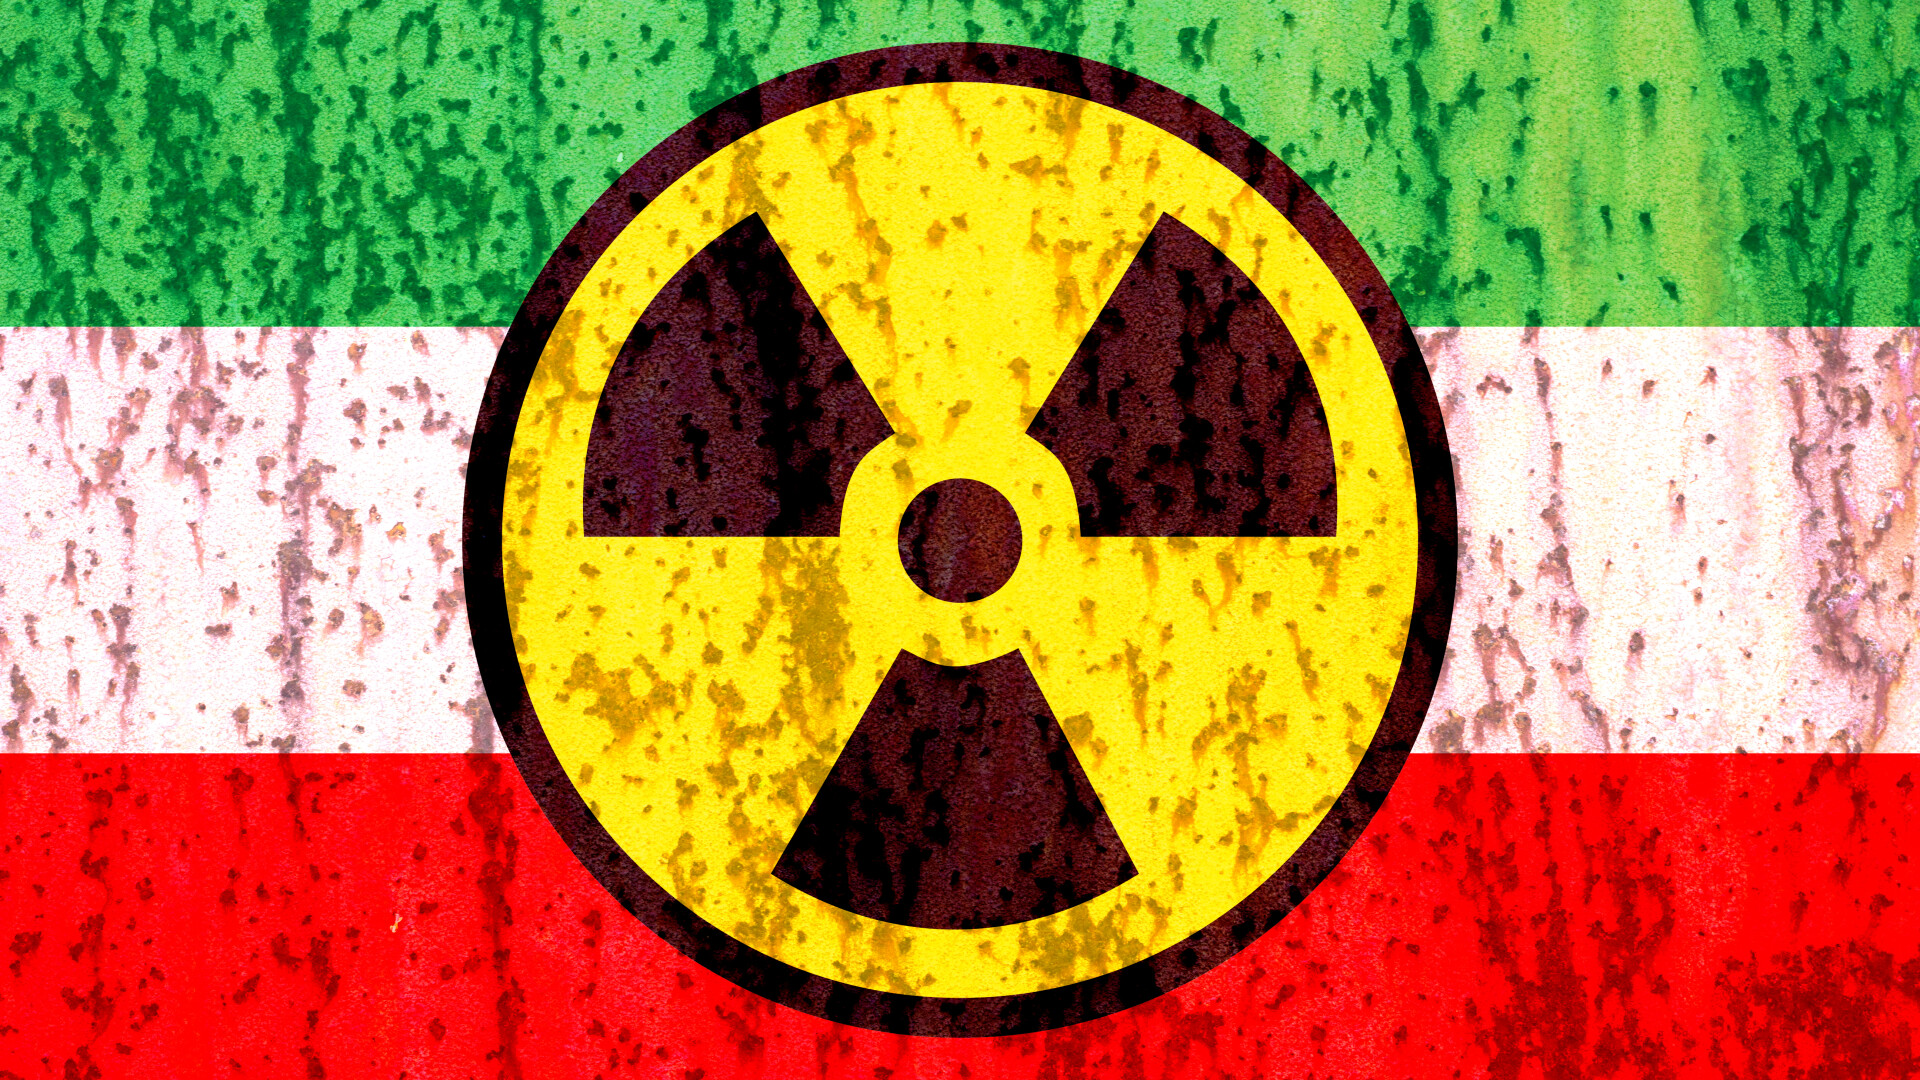 iran uraniu